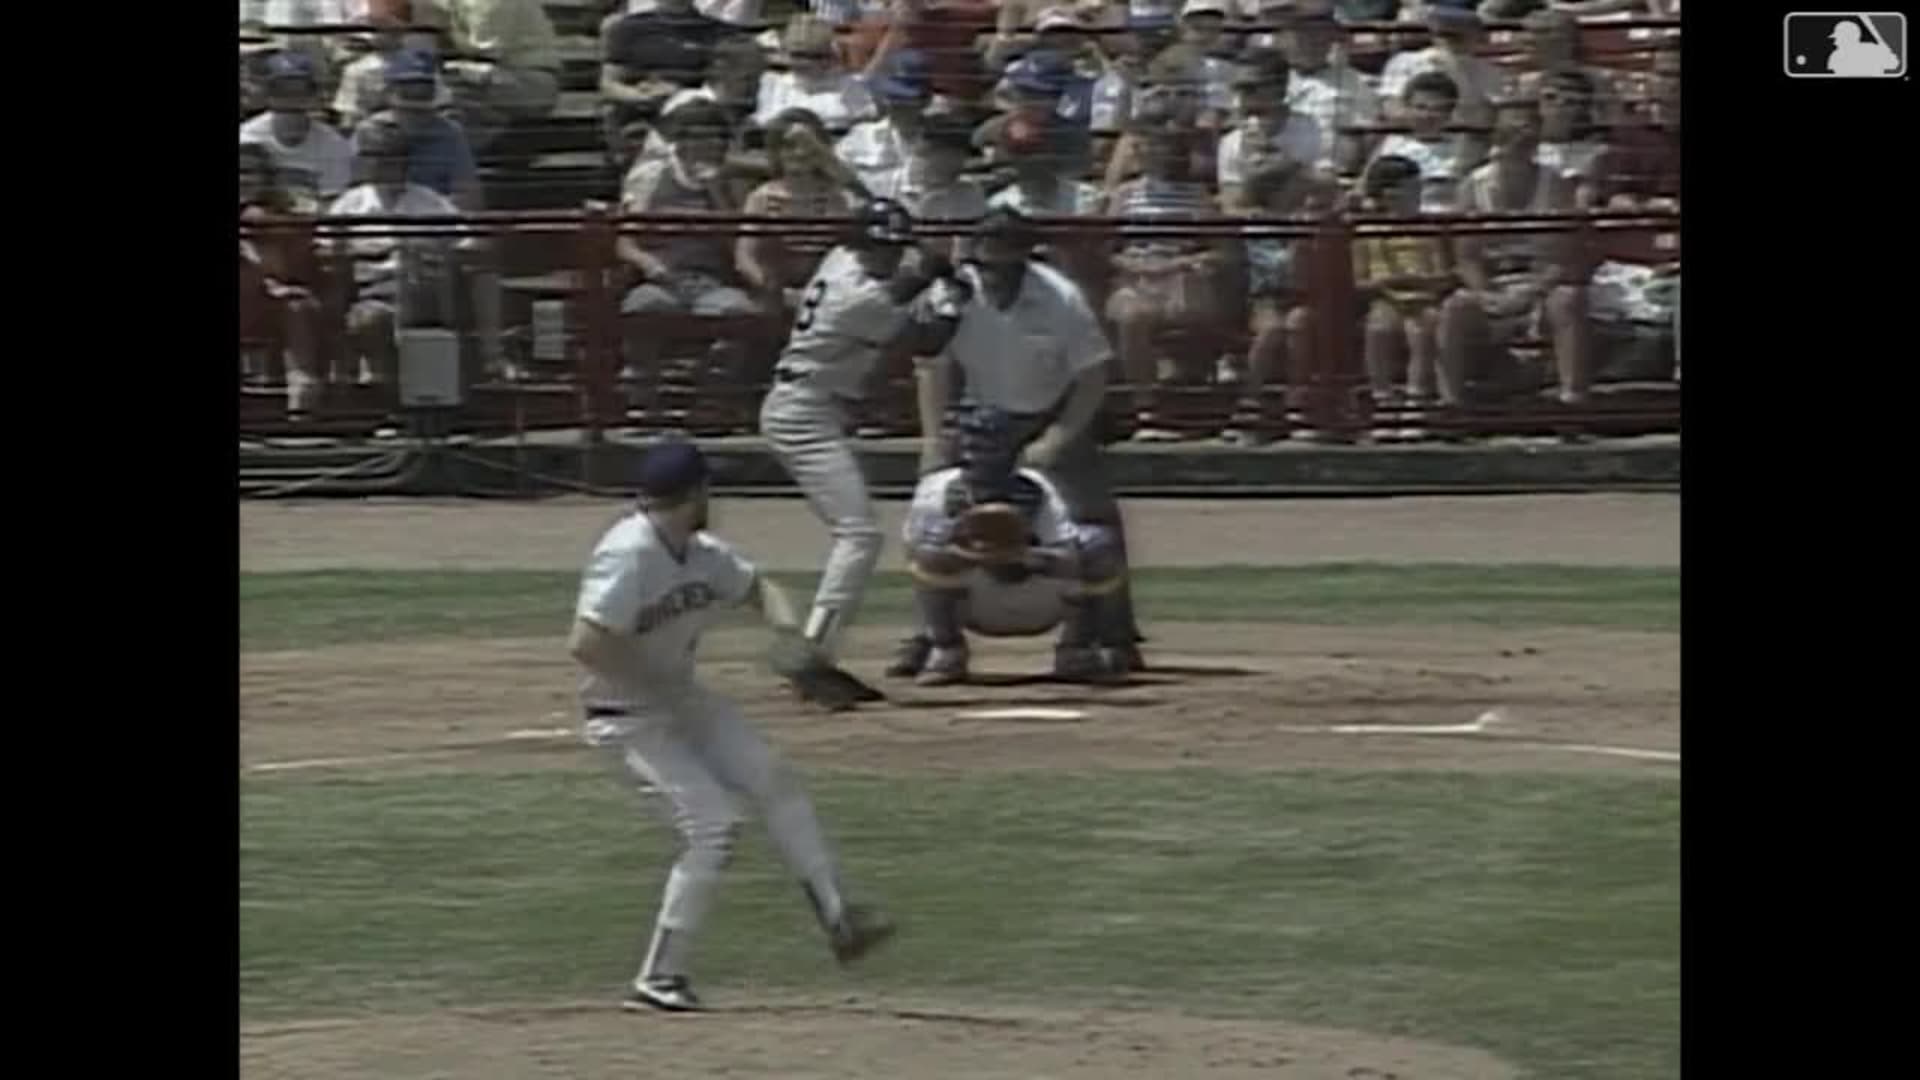 TBT: Reliving Deion Sanders' baseball career